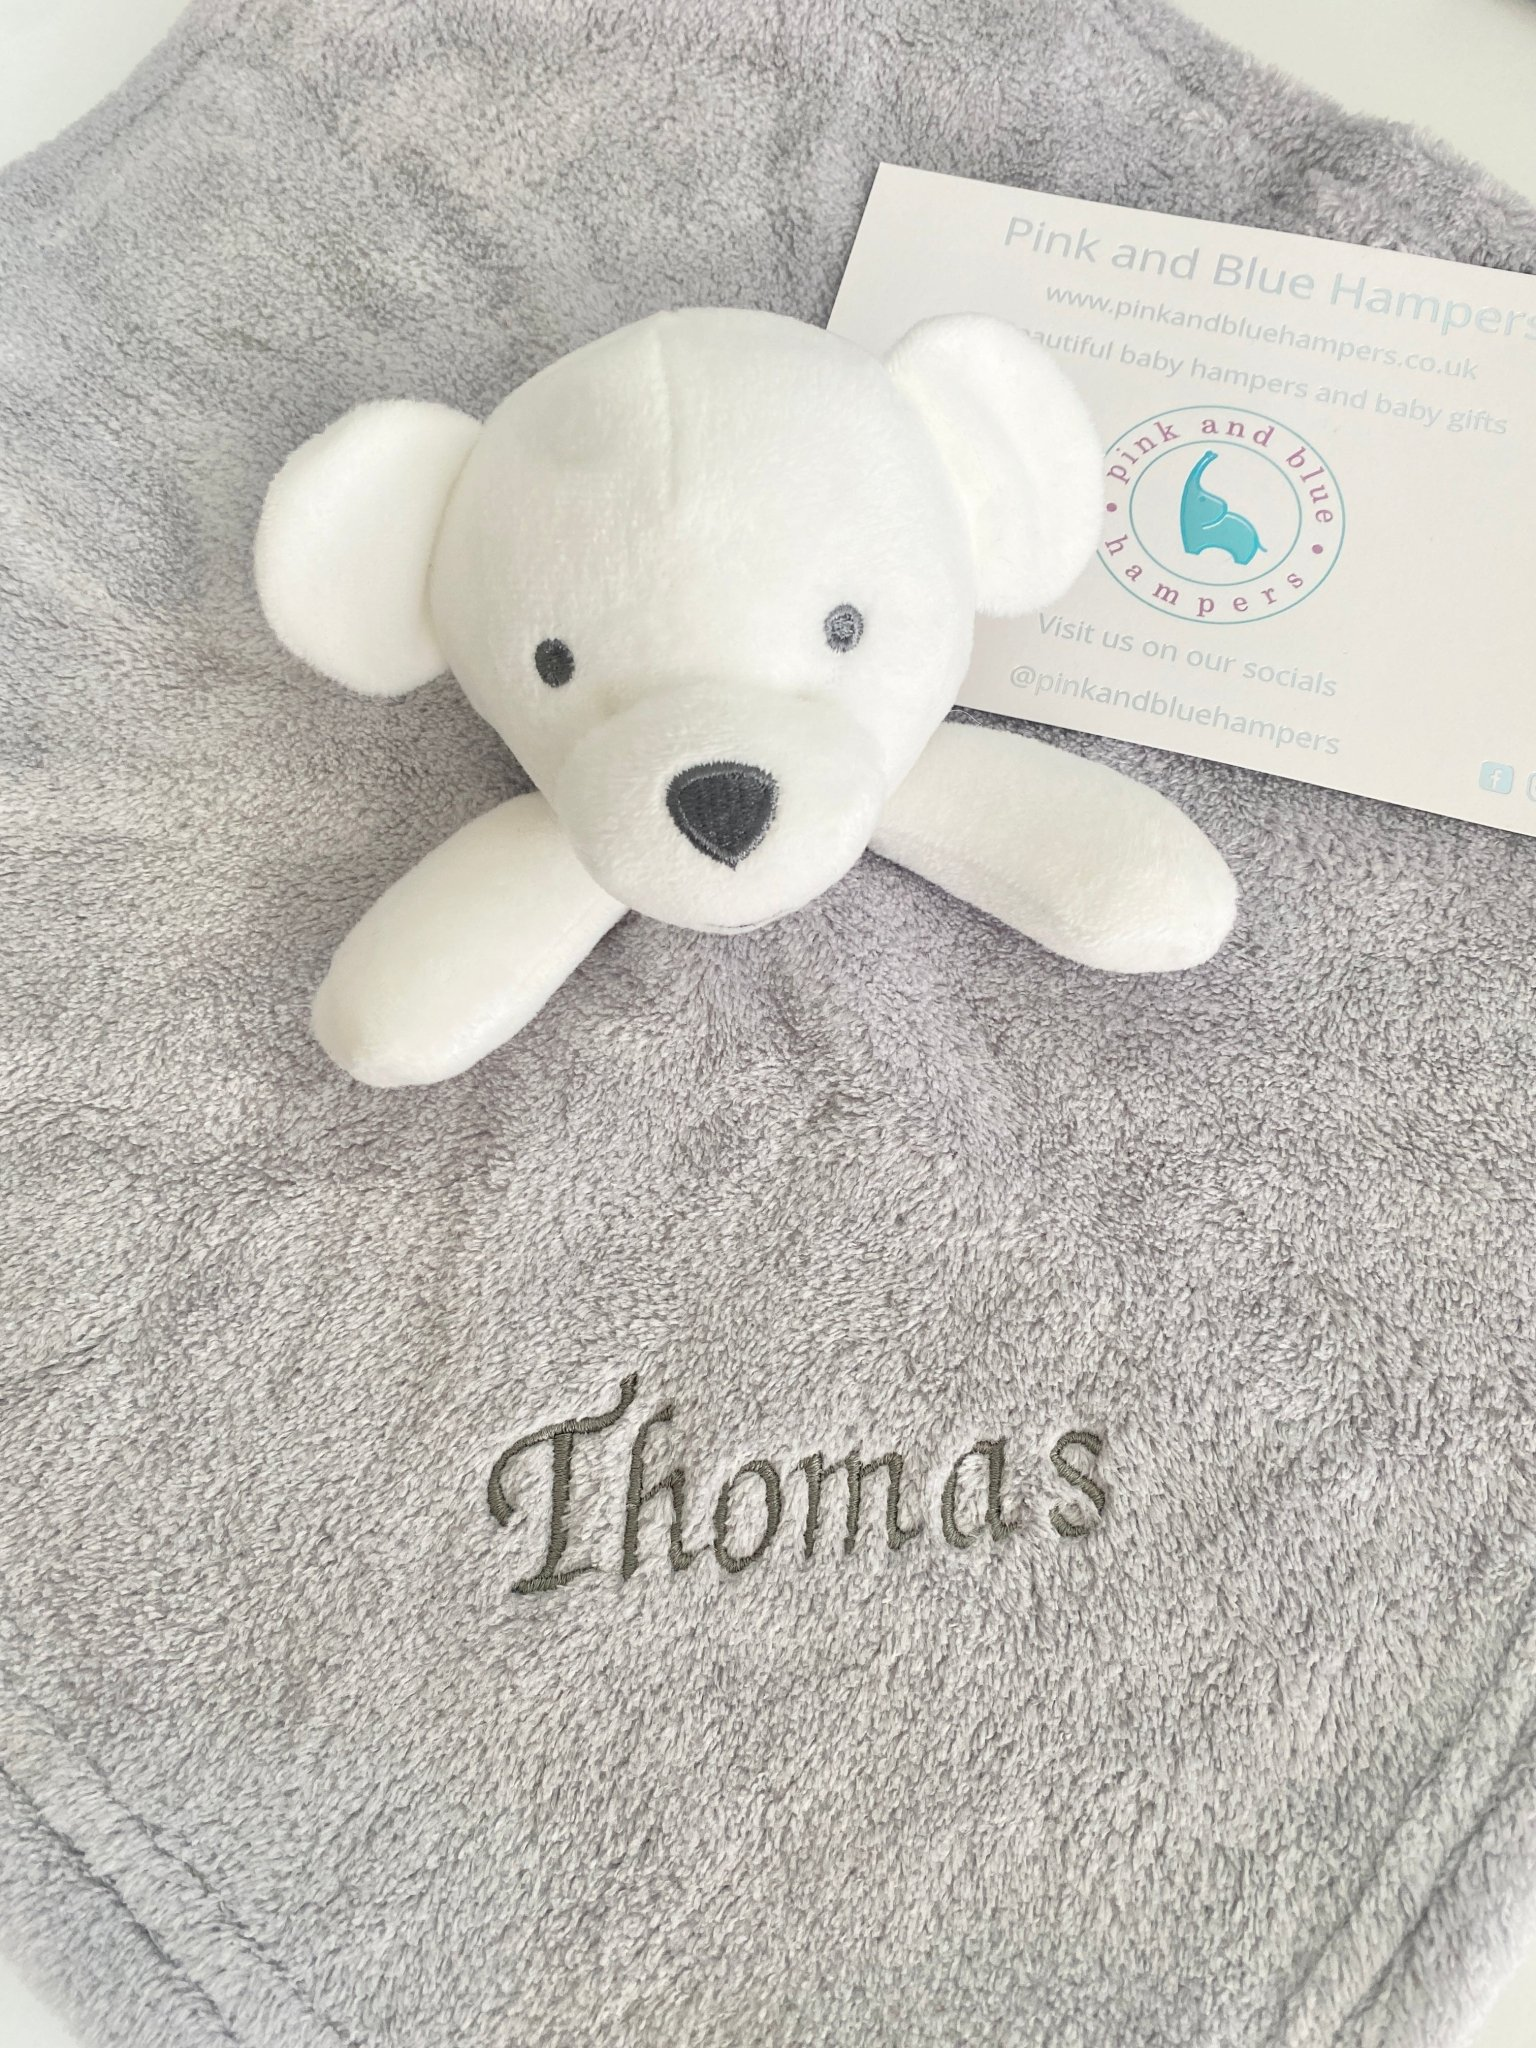 Personalised Baby Comforter from PinkandBlueHampers